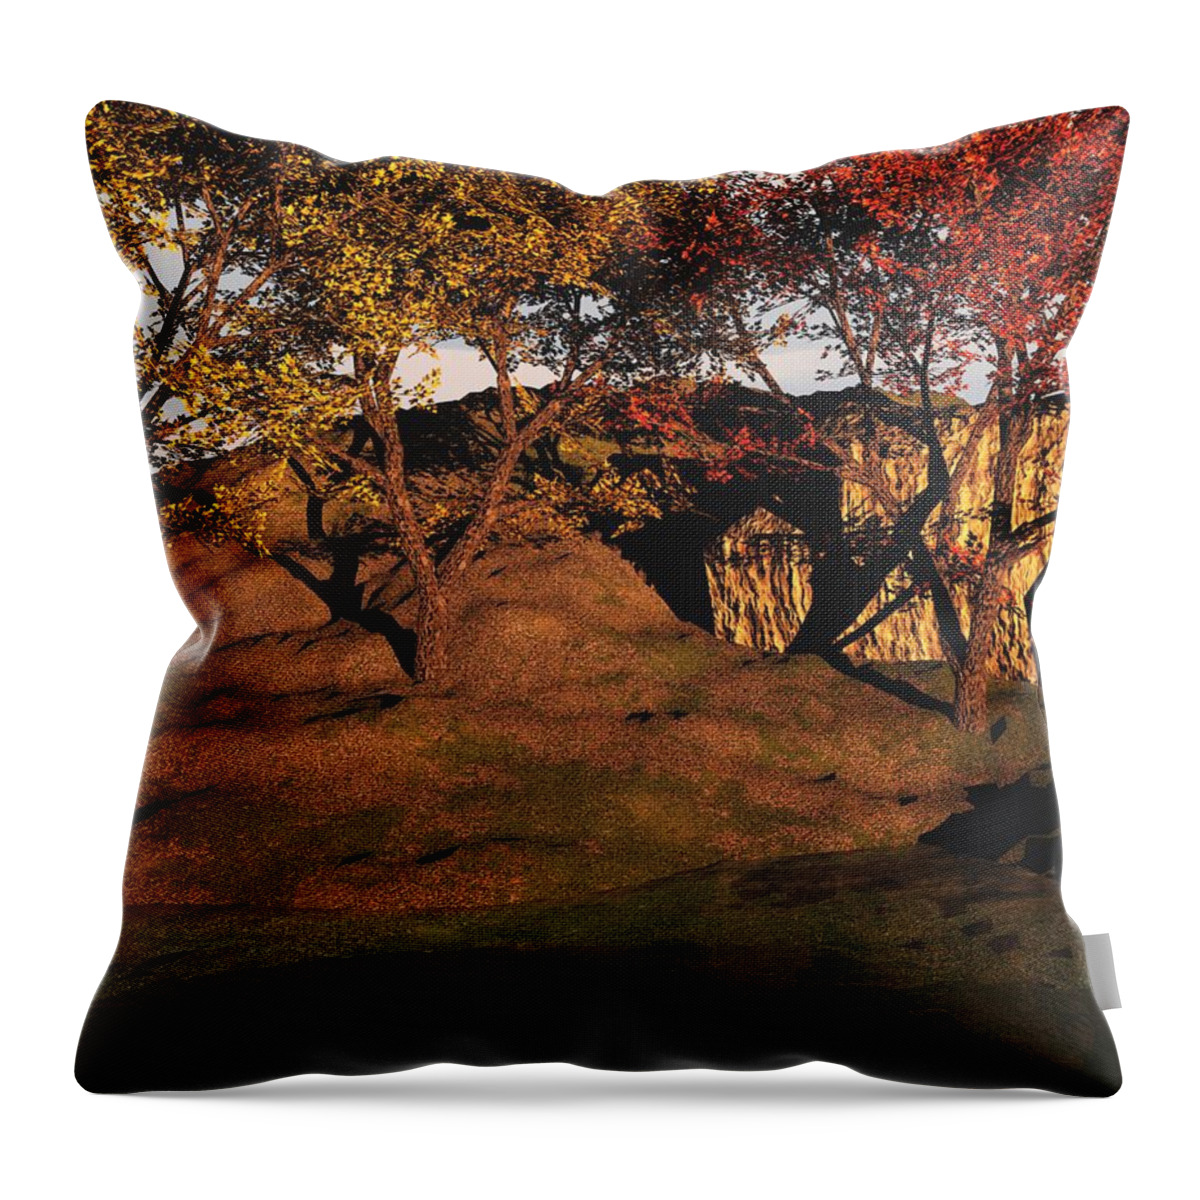 Autumn Throw Pillow featuring the digital art Autumn Grove by David Lane